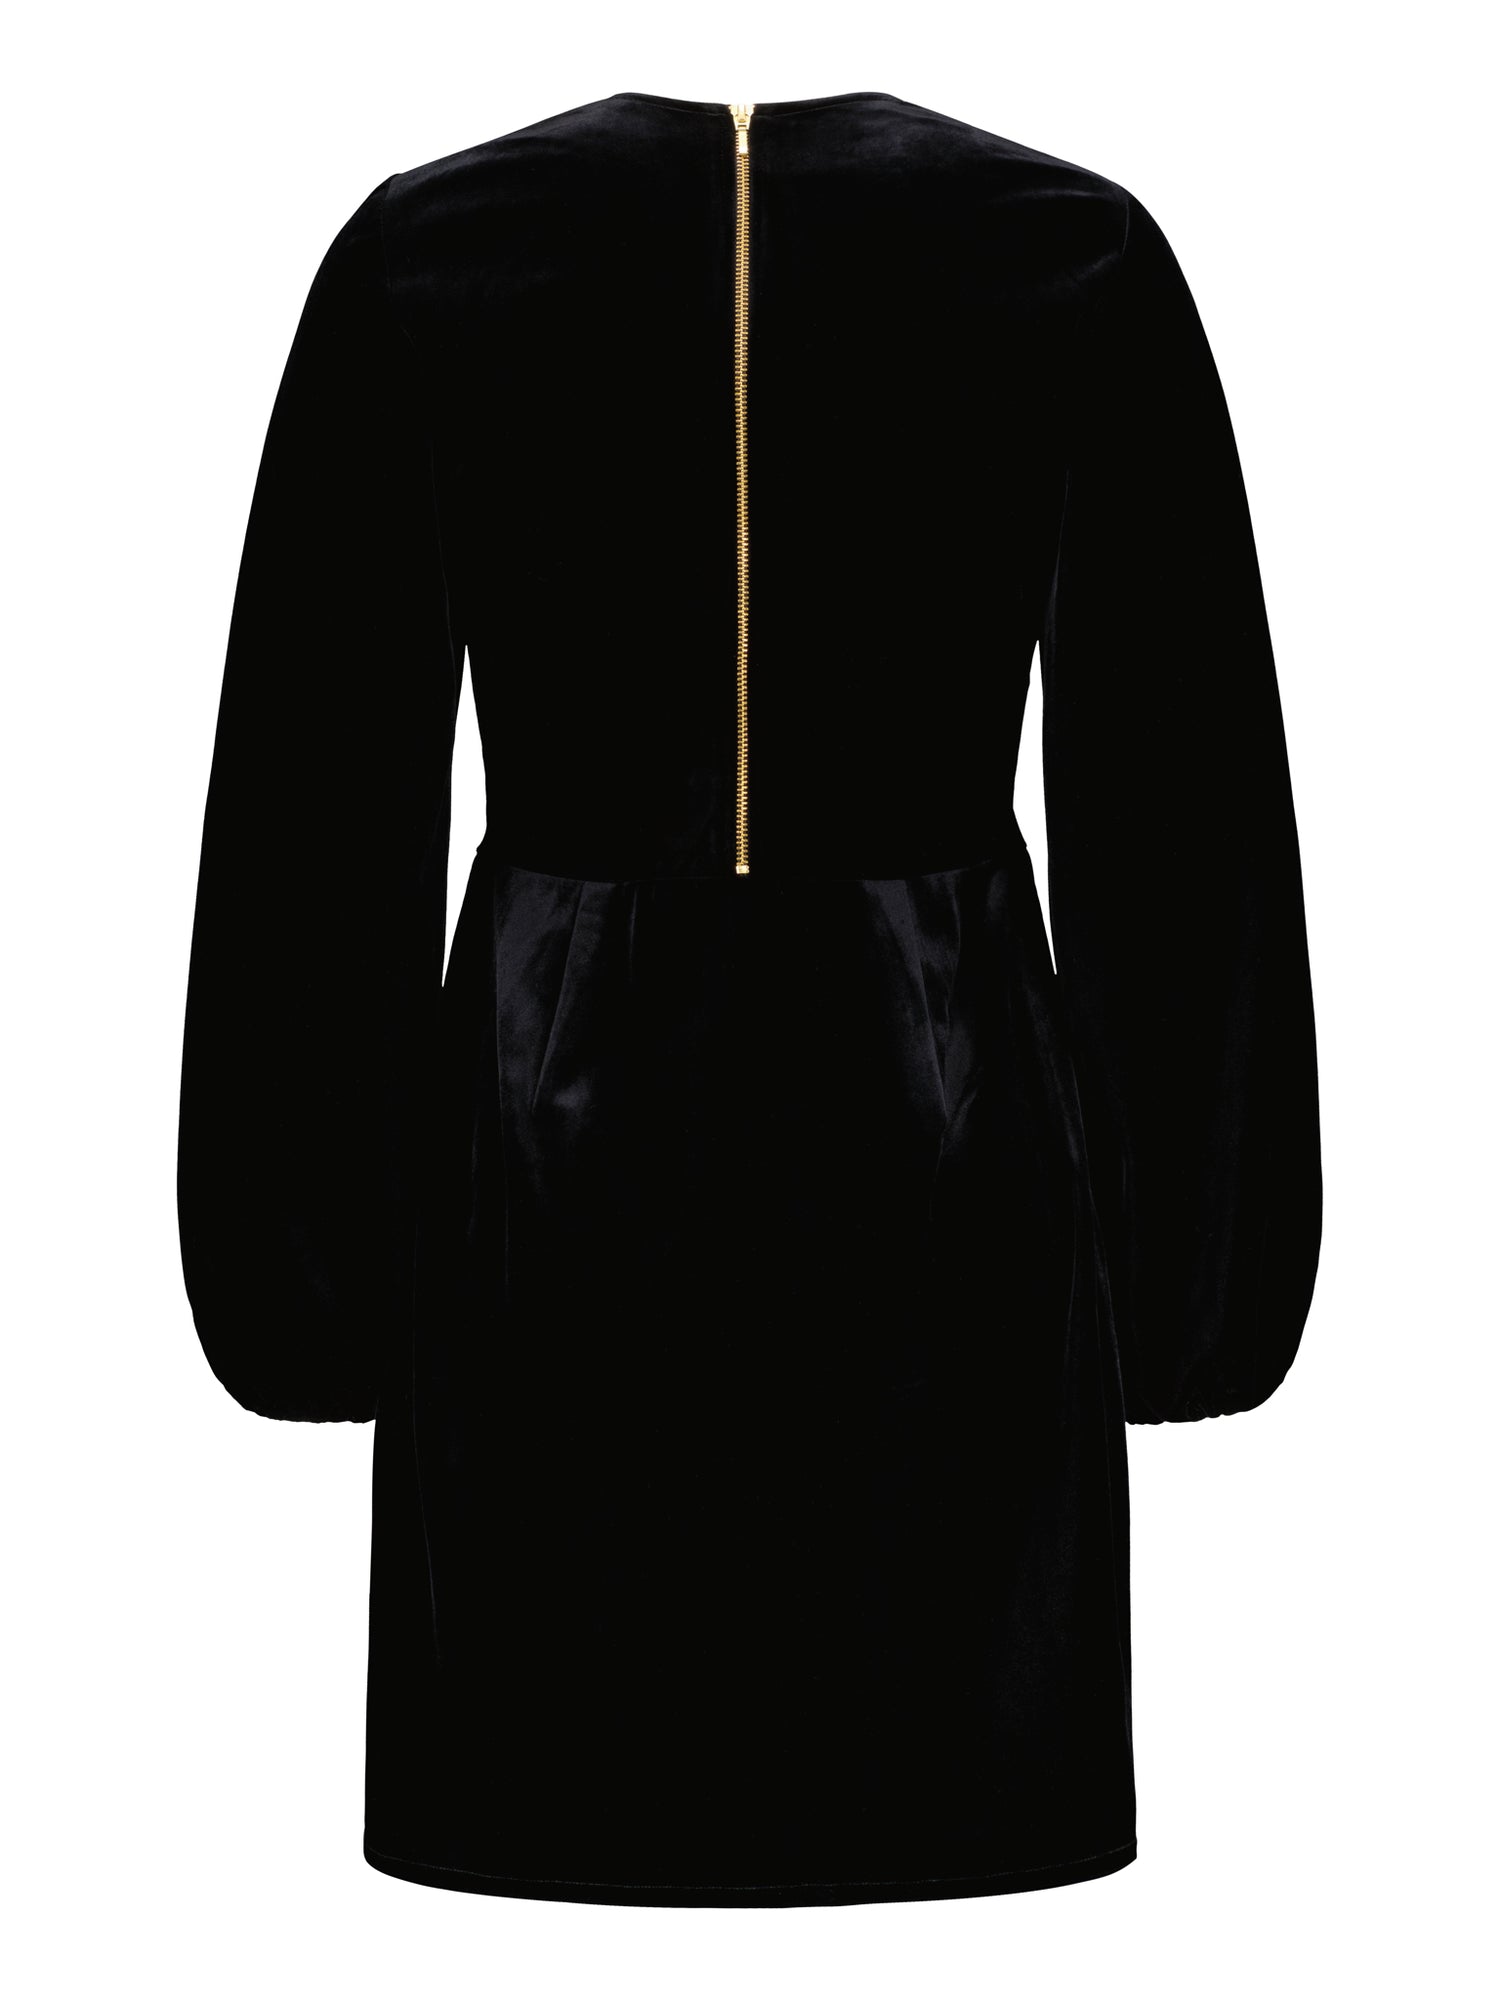 Kielo Dress, Velvet Black